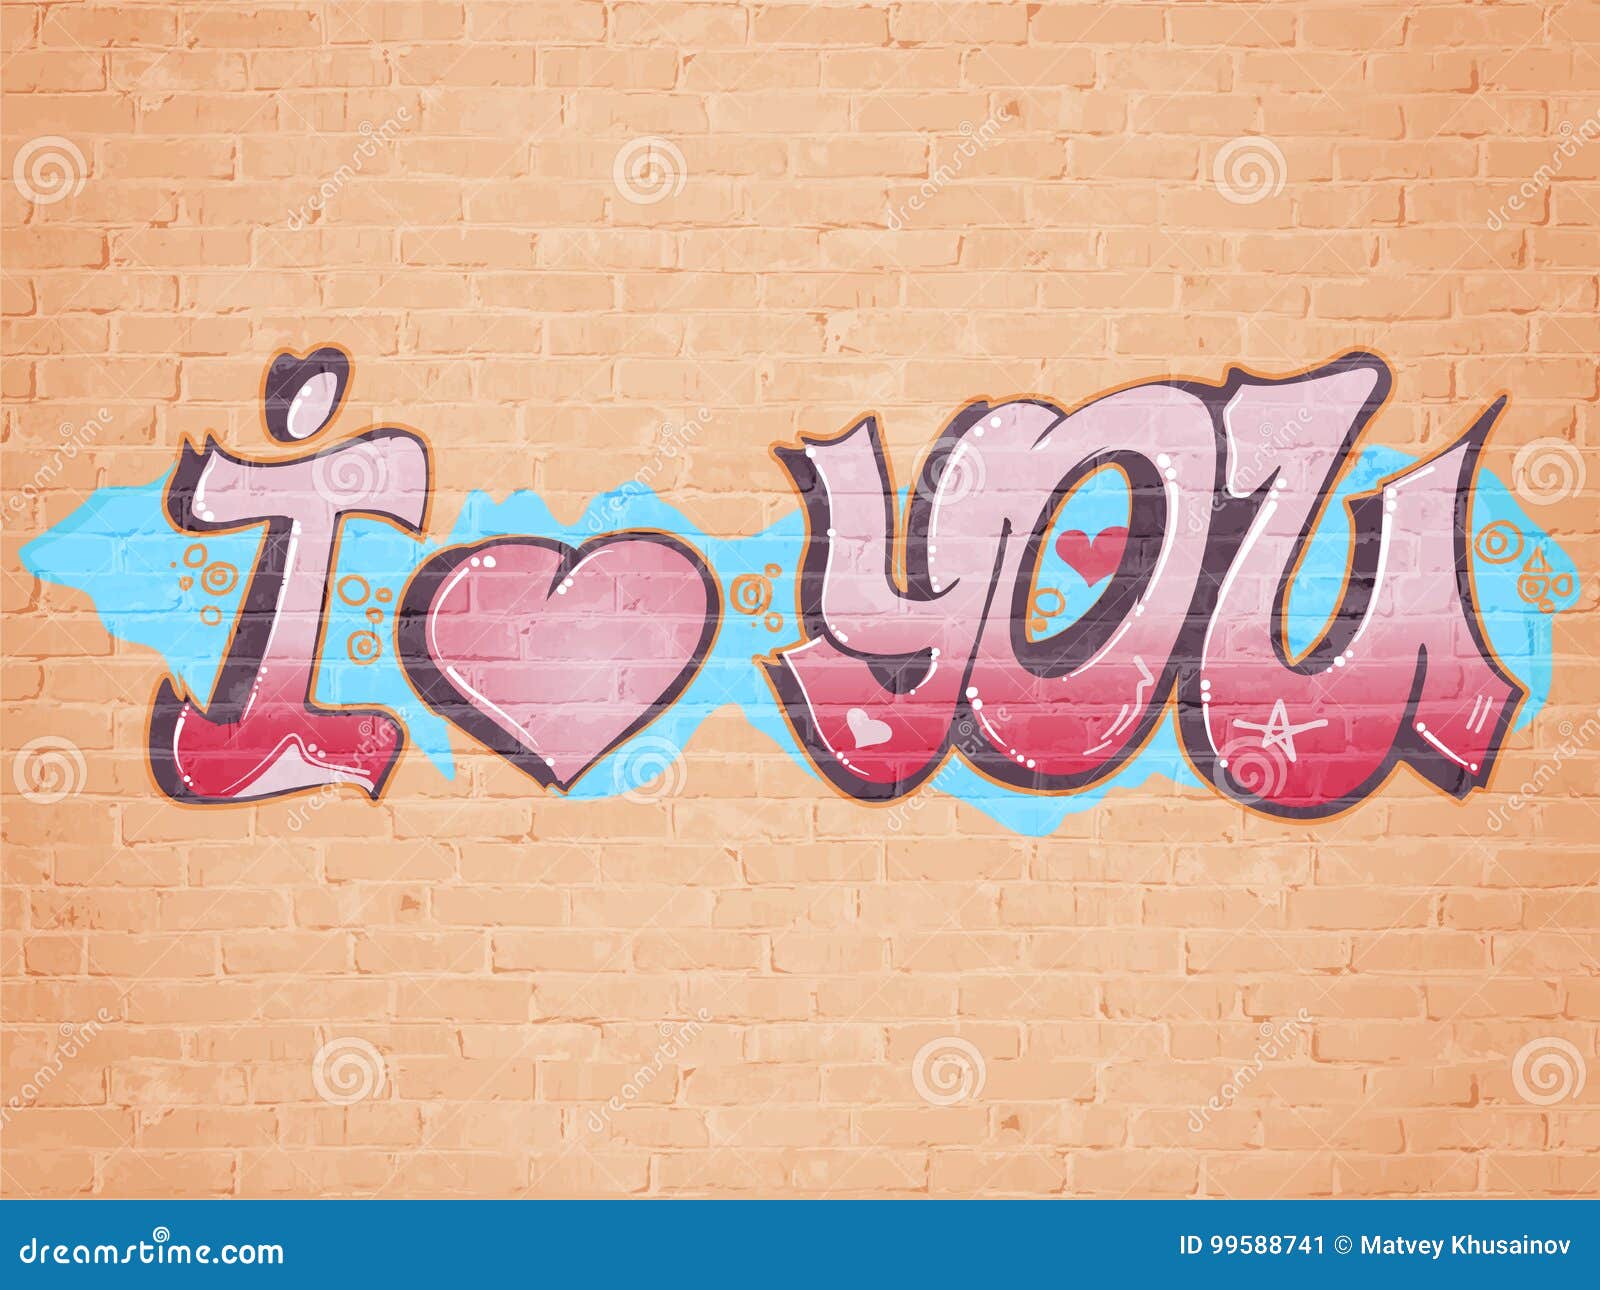 Я тебя обожаю на английском. Граффити Love. Граффити надписи о любви. Граффити люблю. Граффити i Love you.